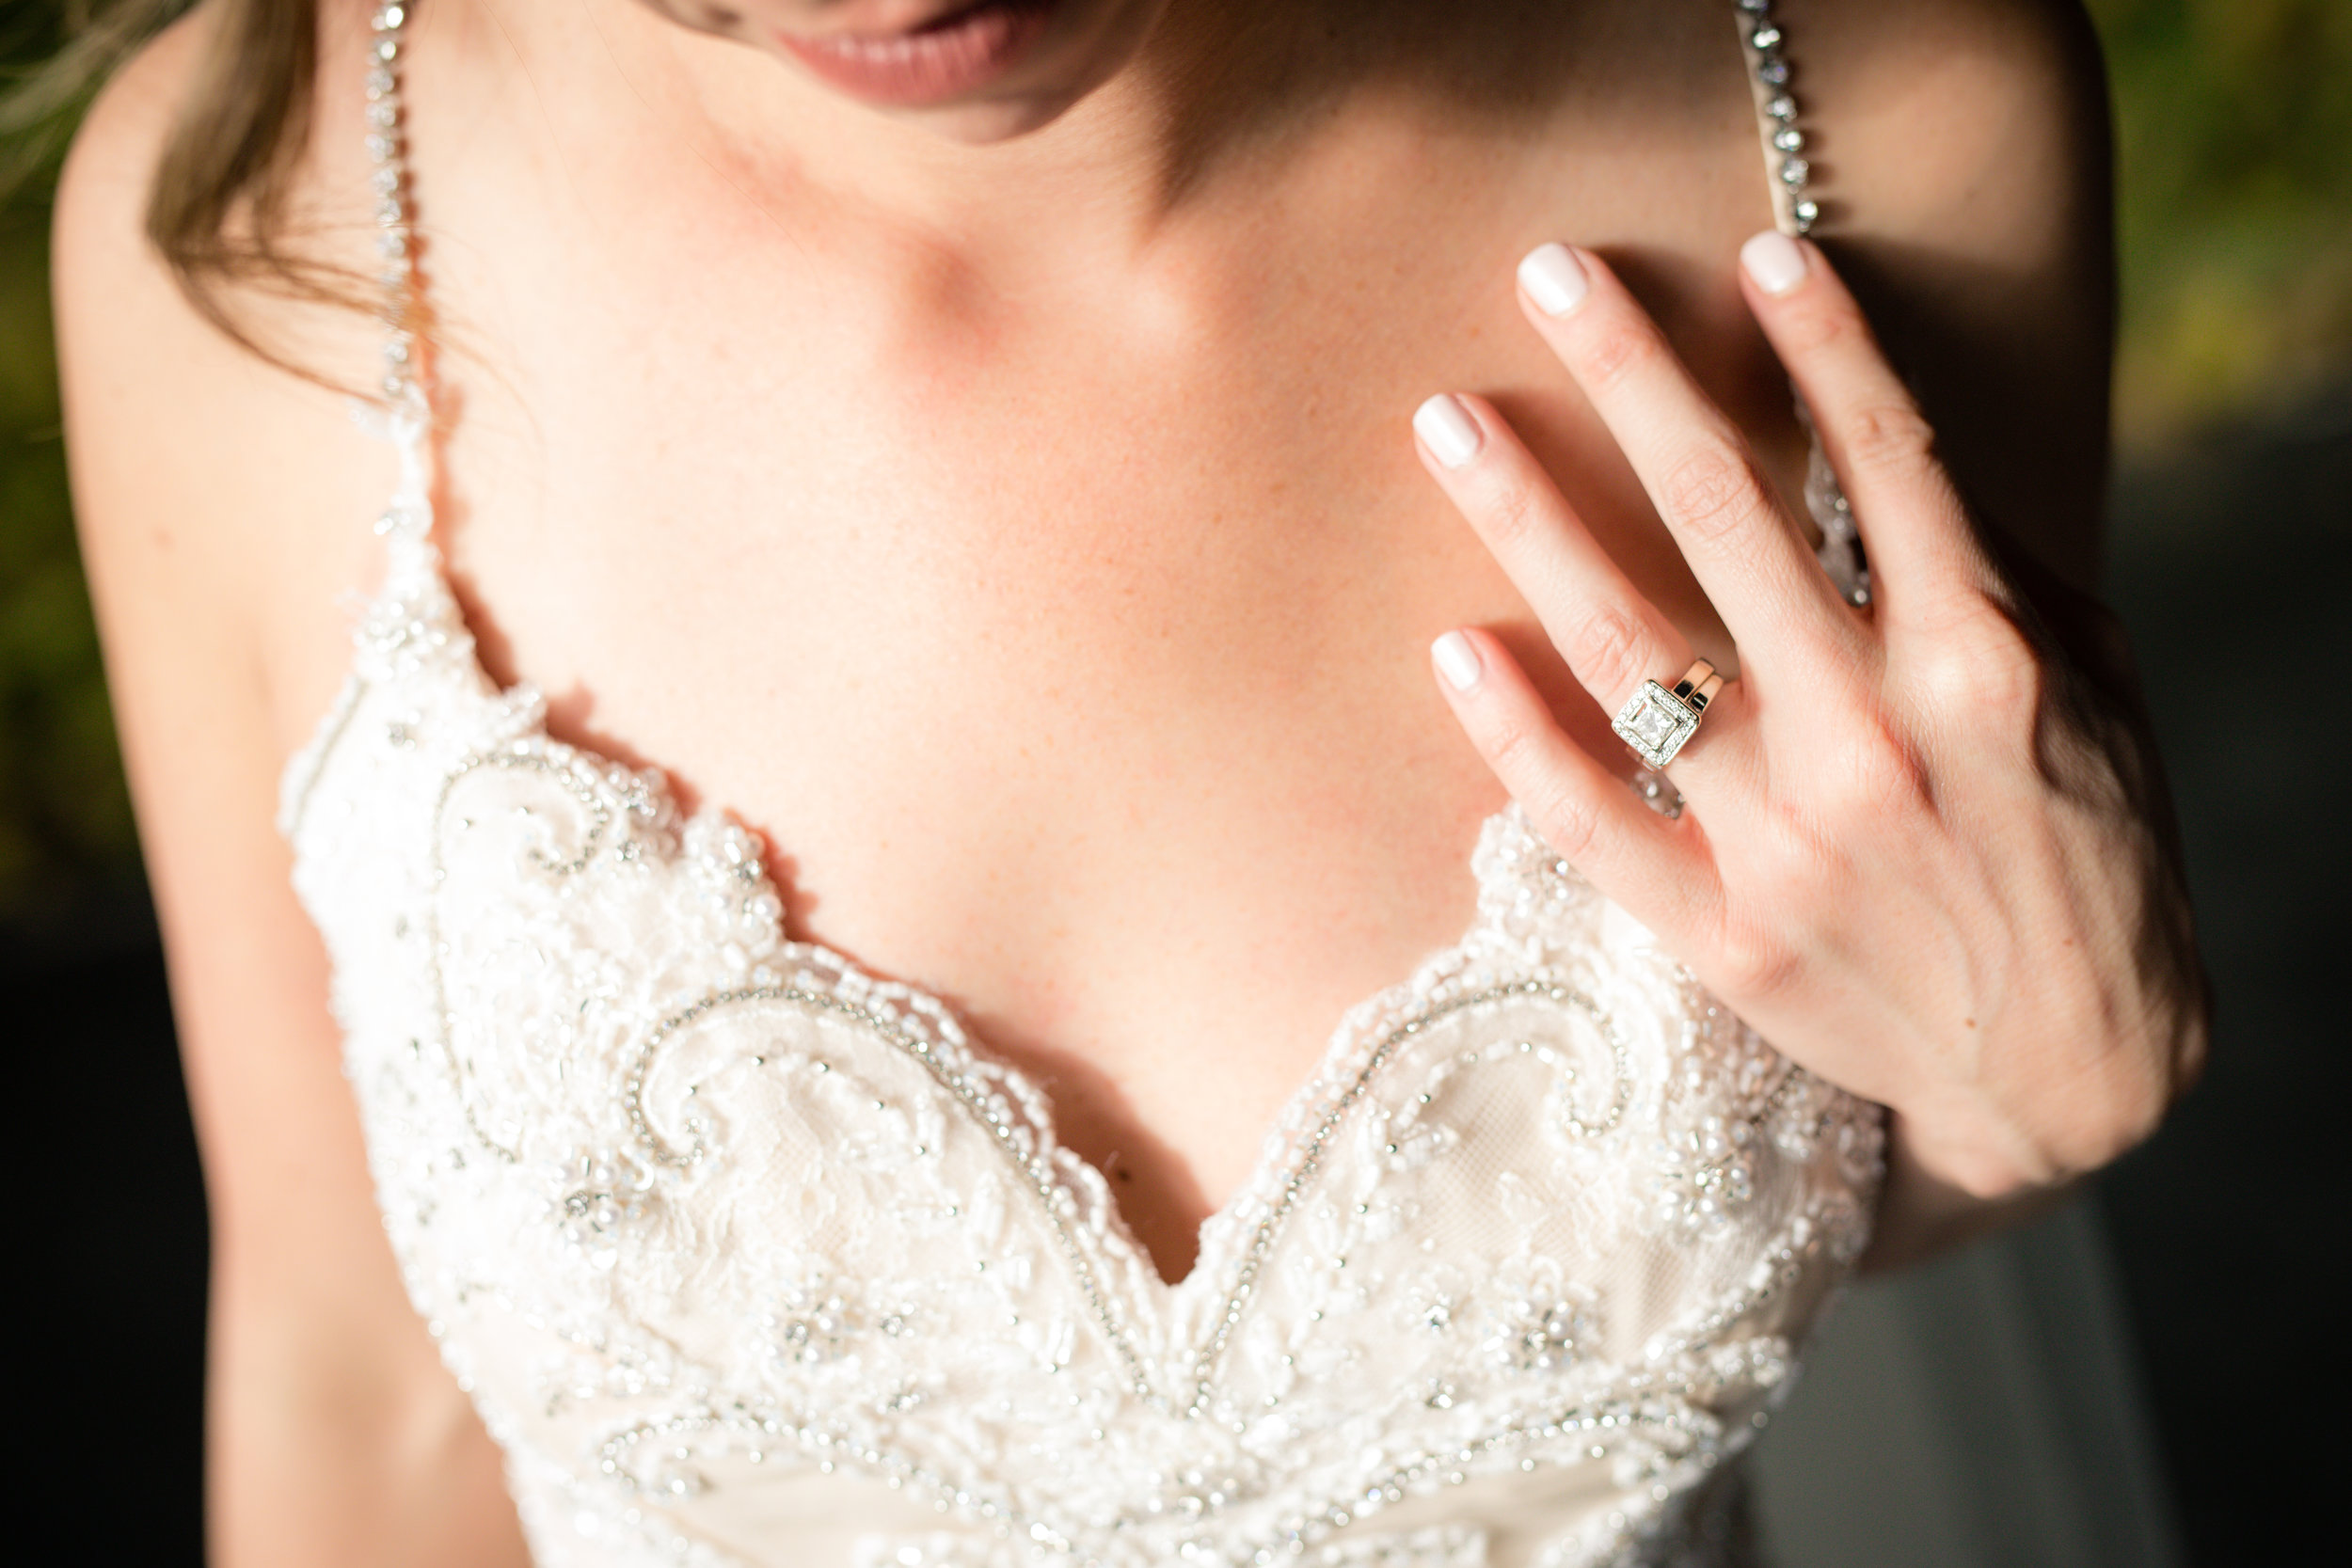 Gatsby-Inspired Styled Wedding — The Overwhelmed Bride Wedding Blog